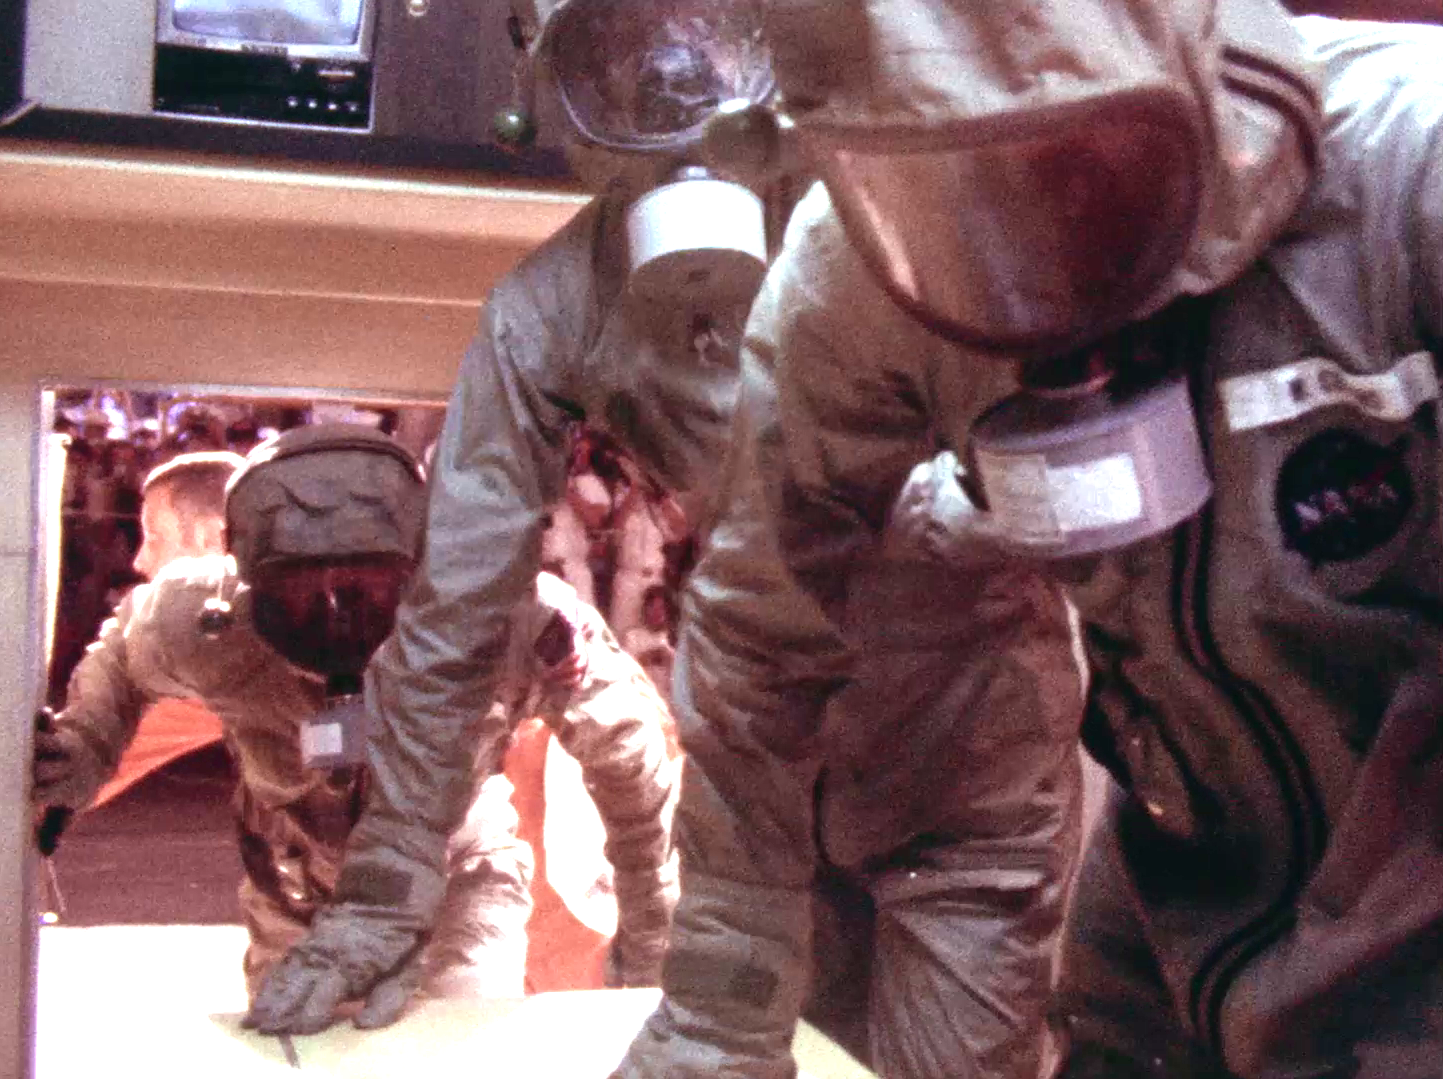 NASA engineer John Hirasaki filmed the astronauts as they entered the MQF